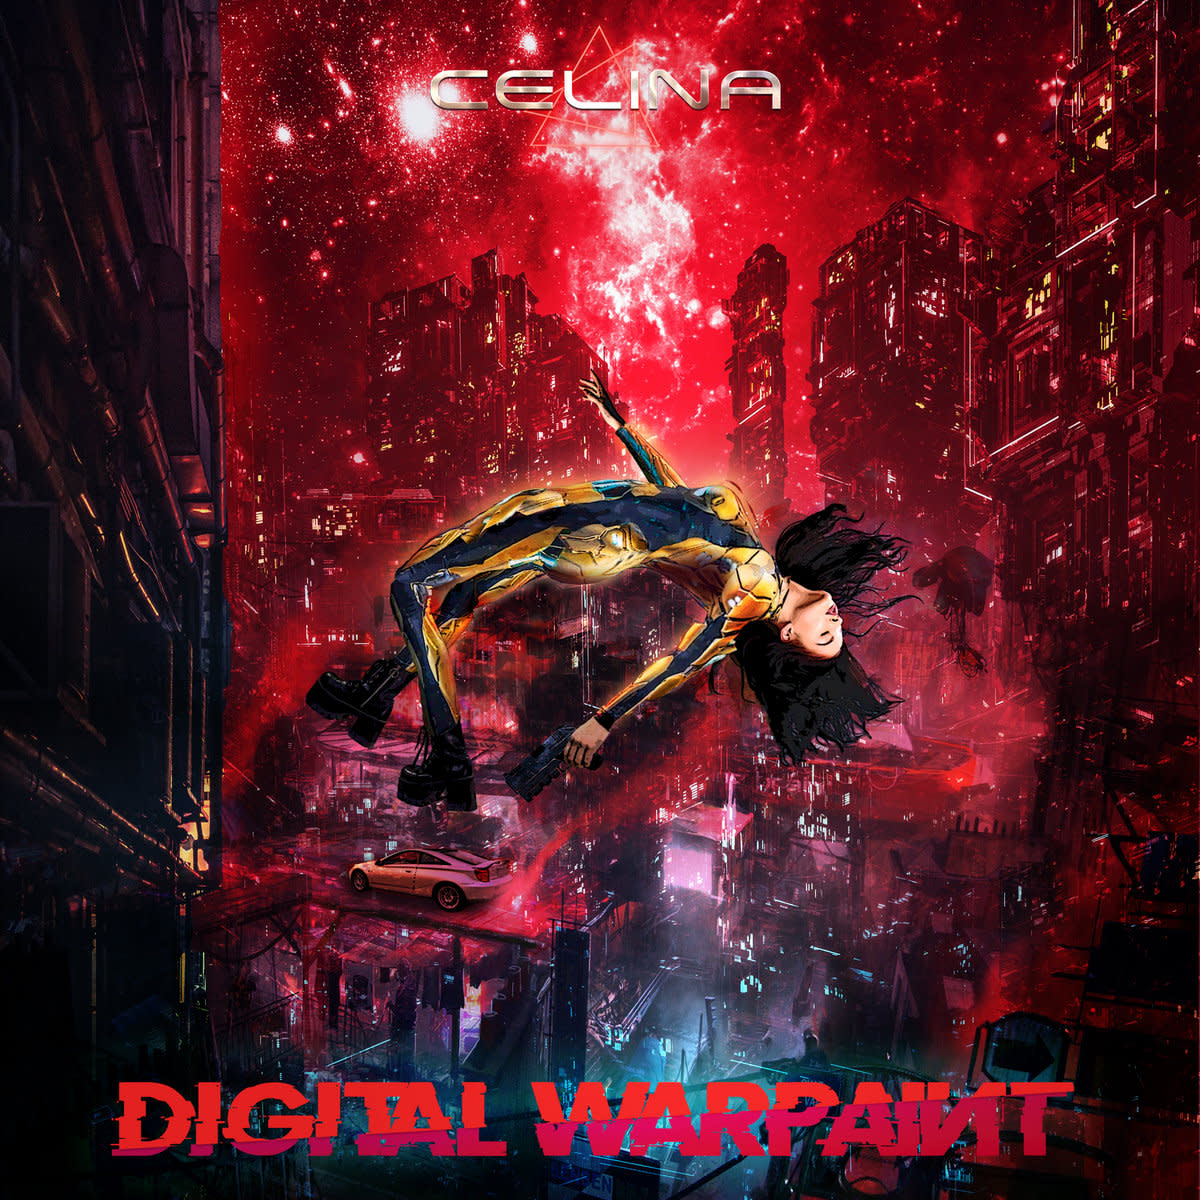 cyberpunk-album-review-digital-warpaint-by-celina